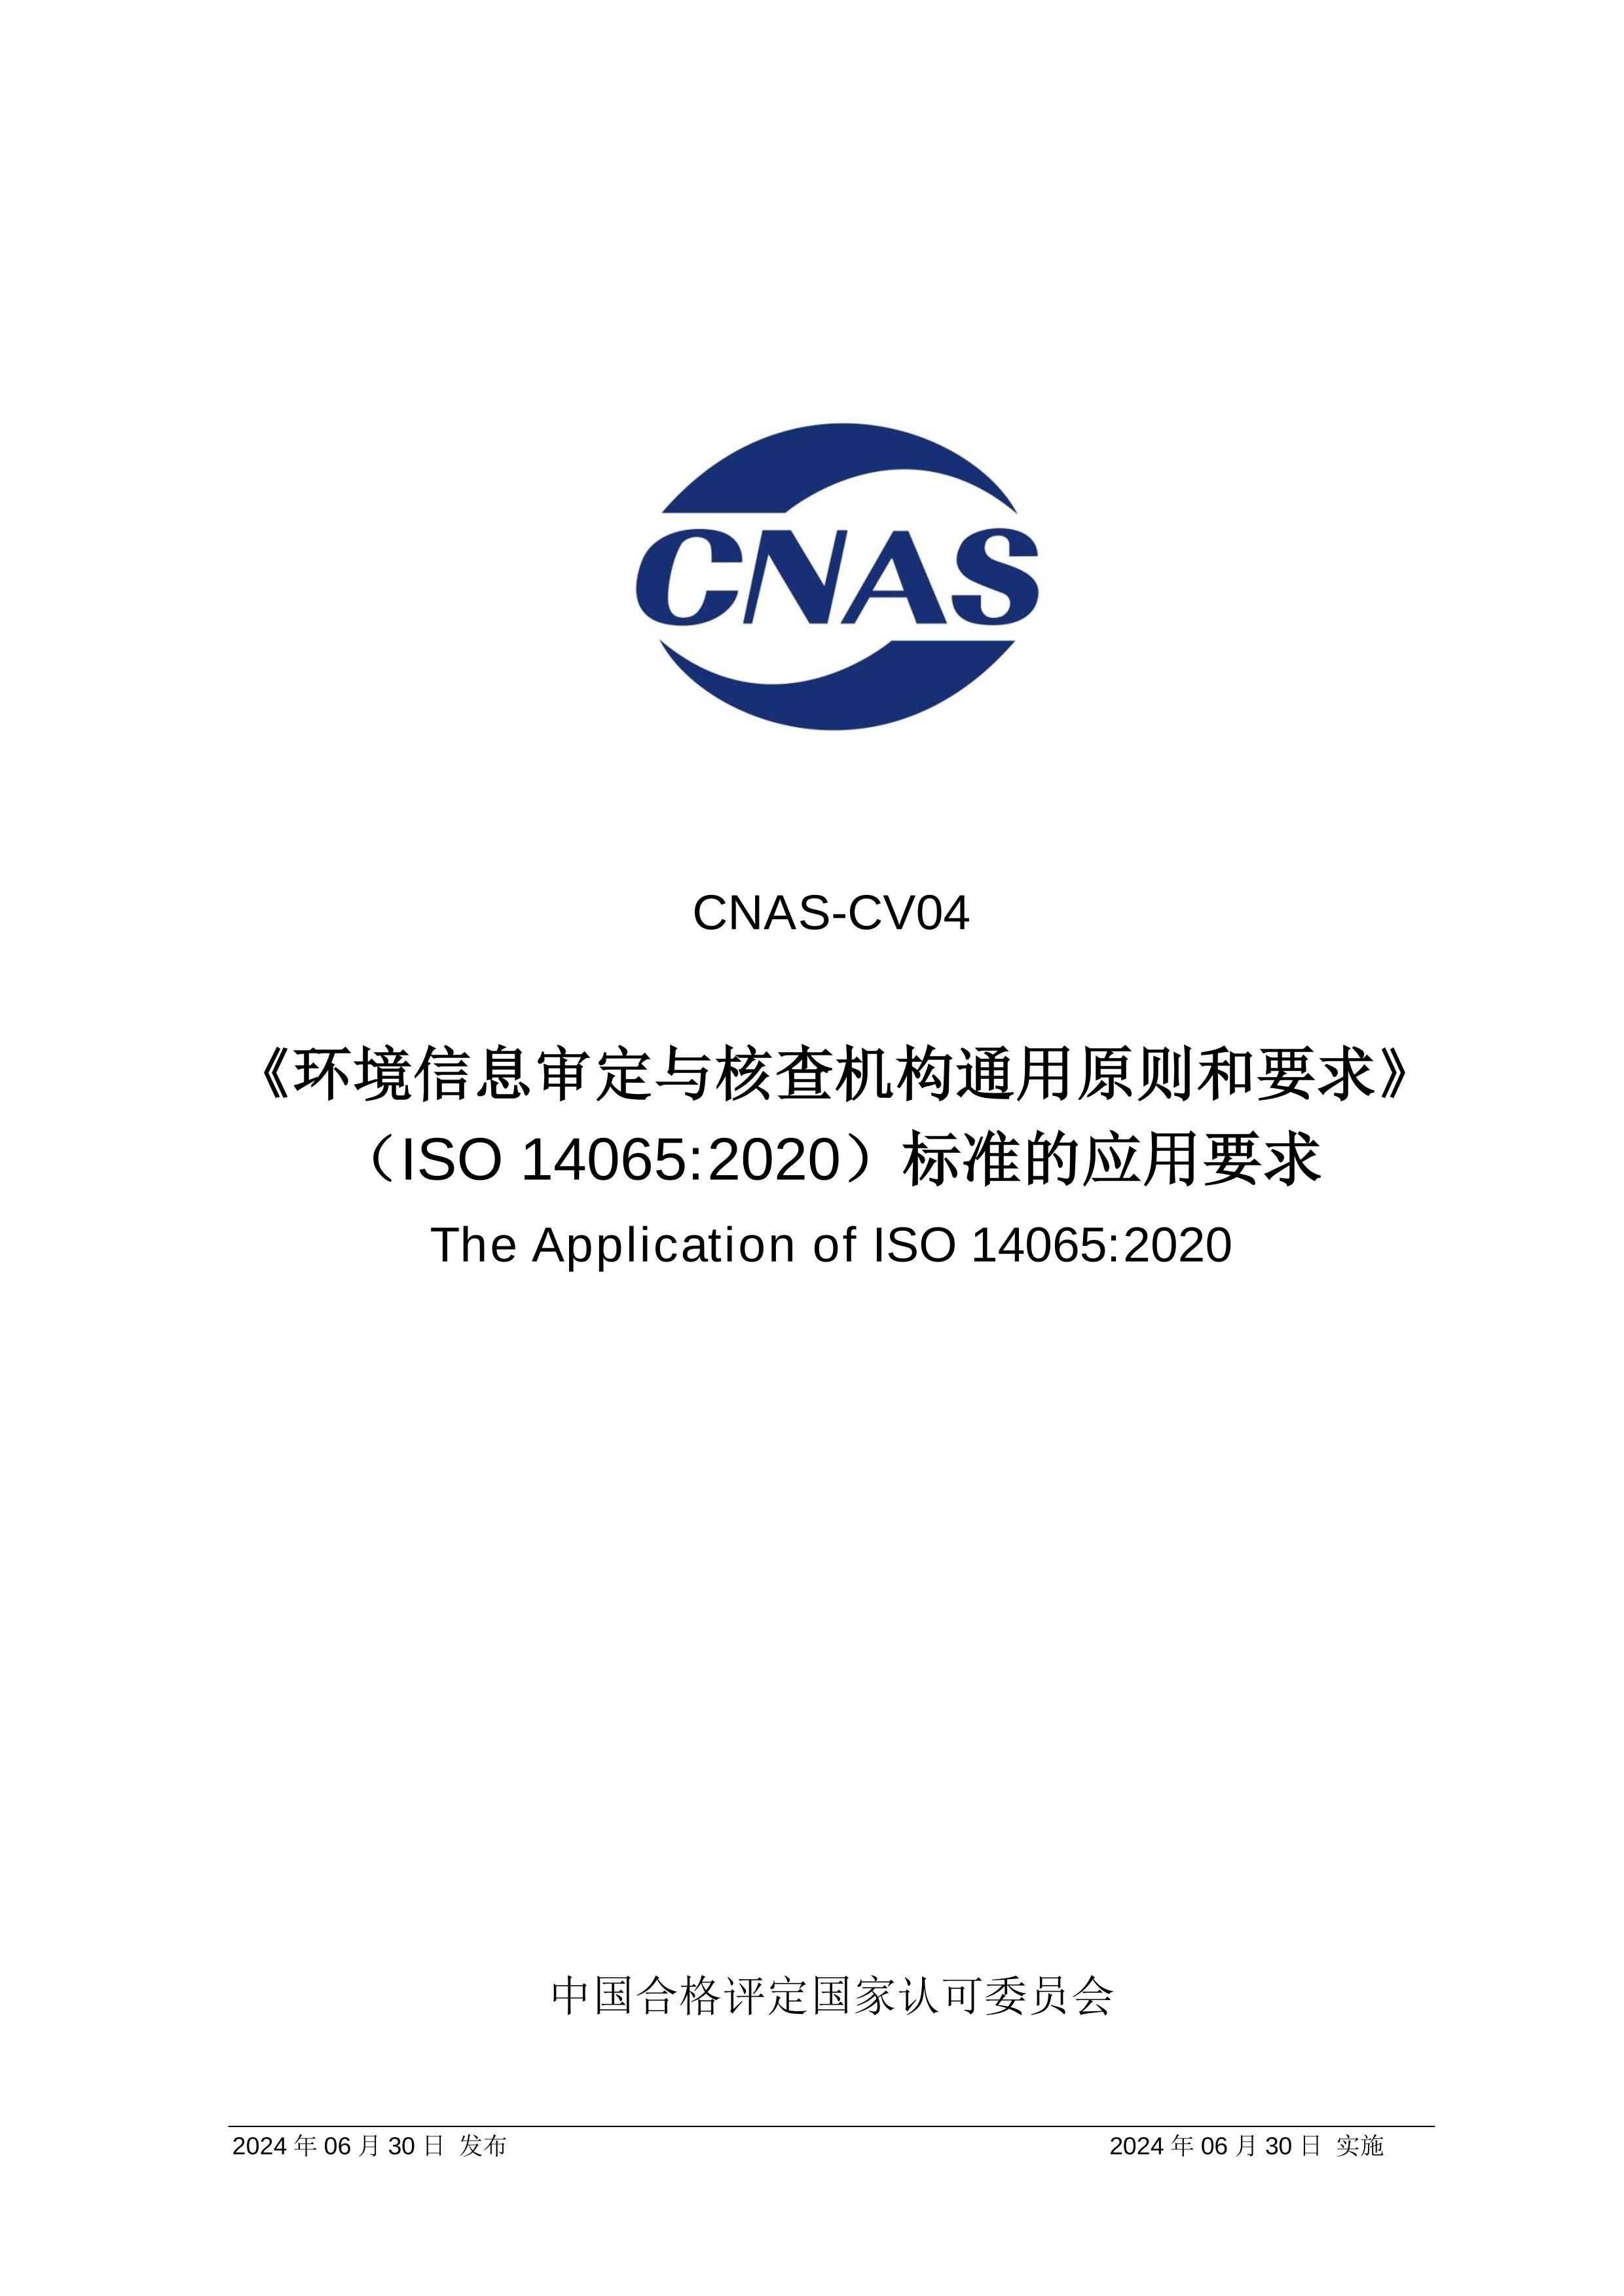 CNAS-CV042024.pdf1ҳ